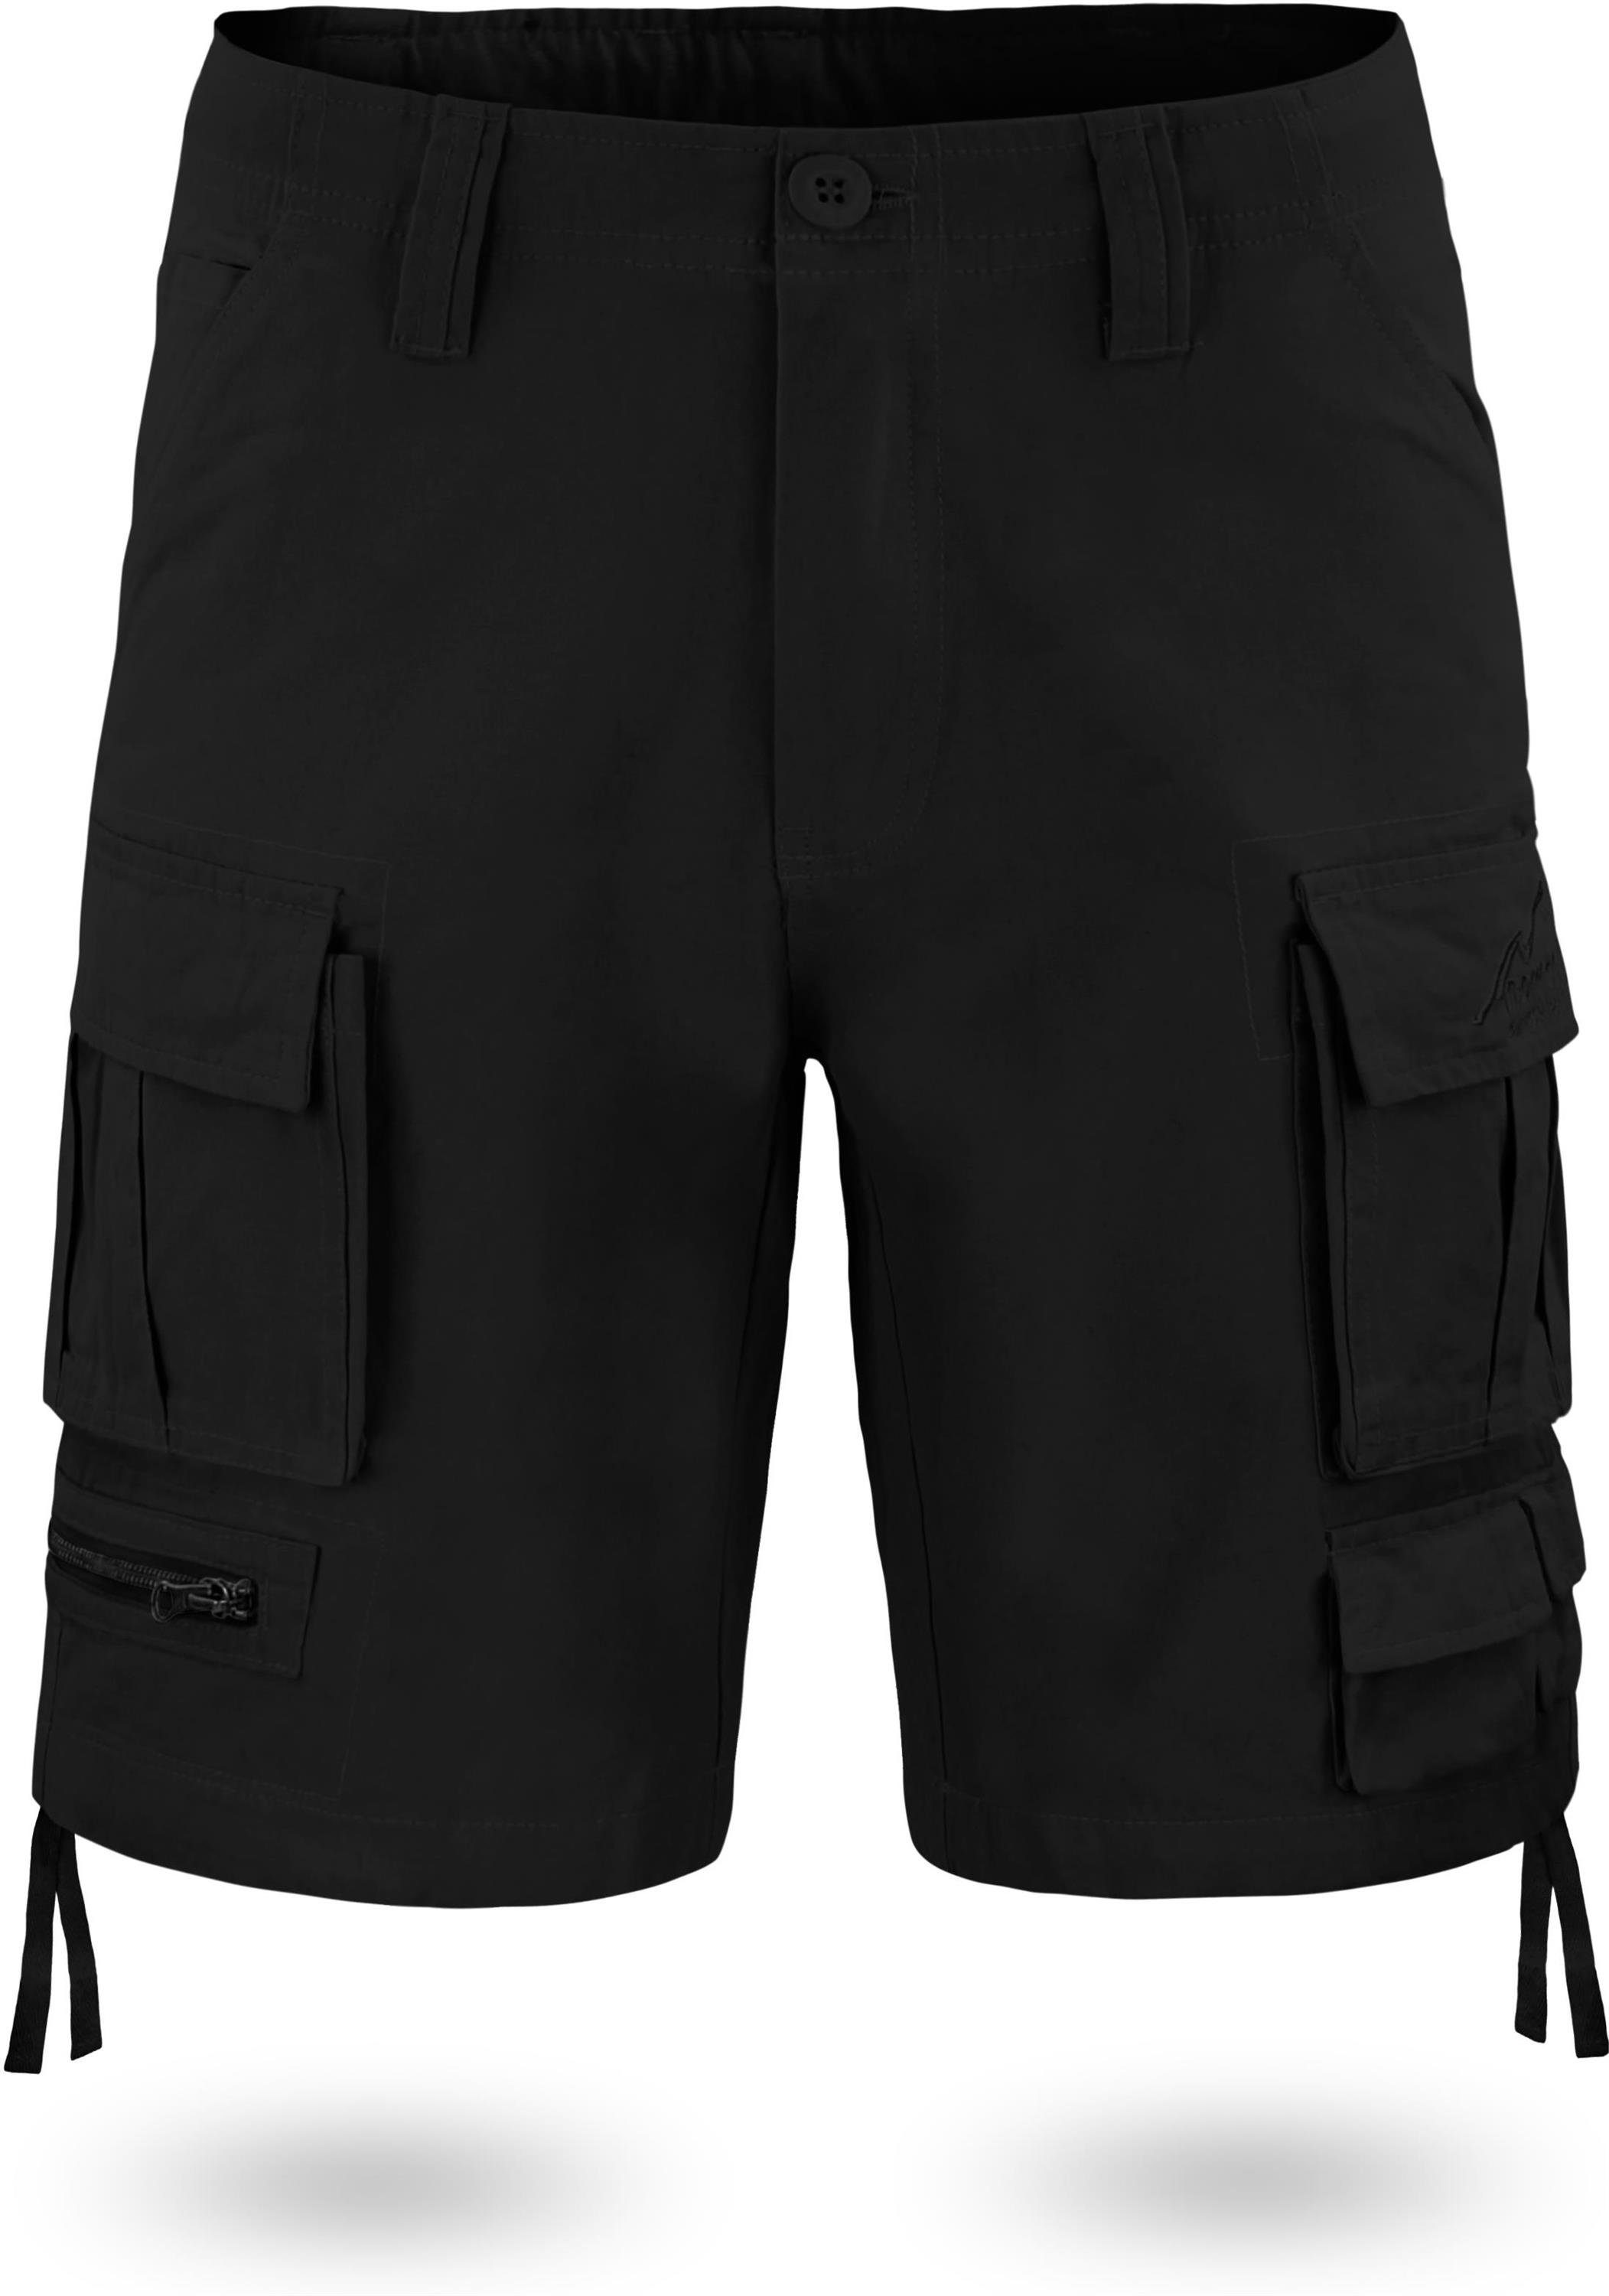 aus Schwarz Atacama kurze Shorts 100% Bio-Baumwolle Bermudas Vintage Cargoshorts Sommershorts normani Herren Shorts